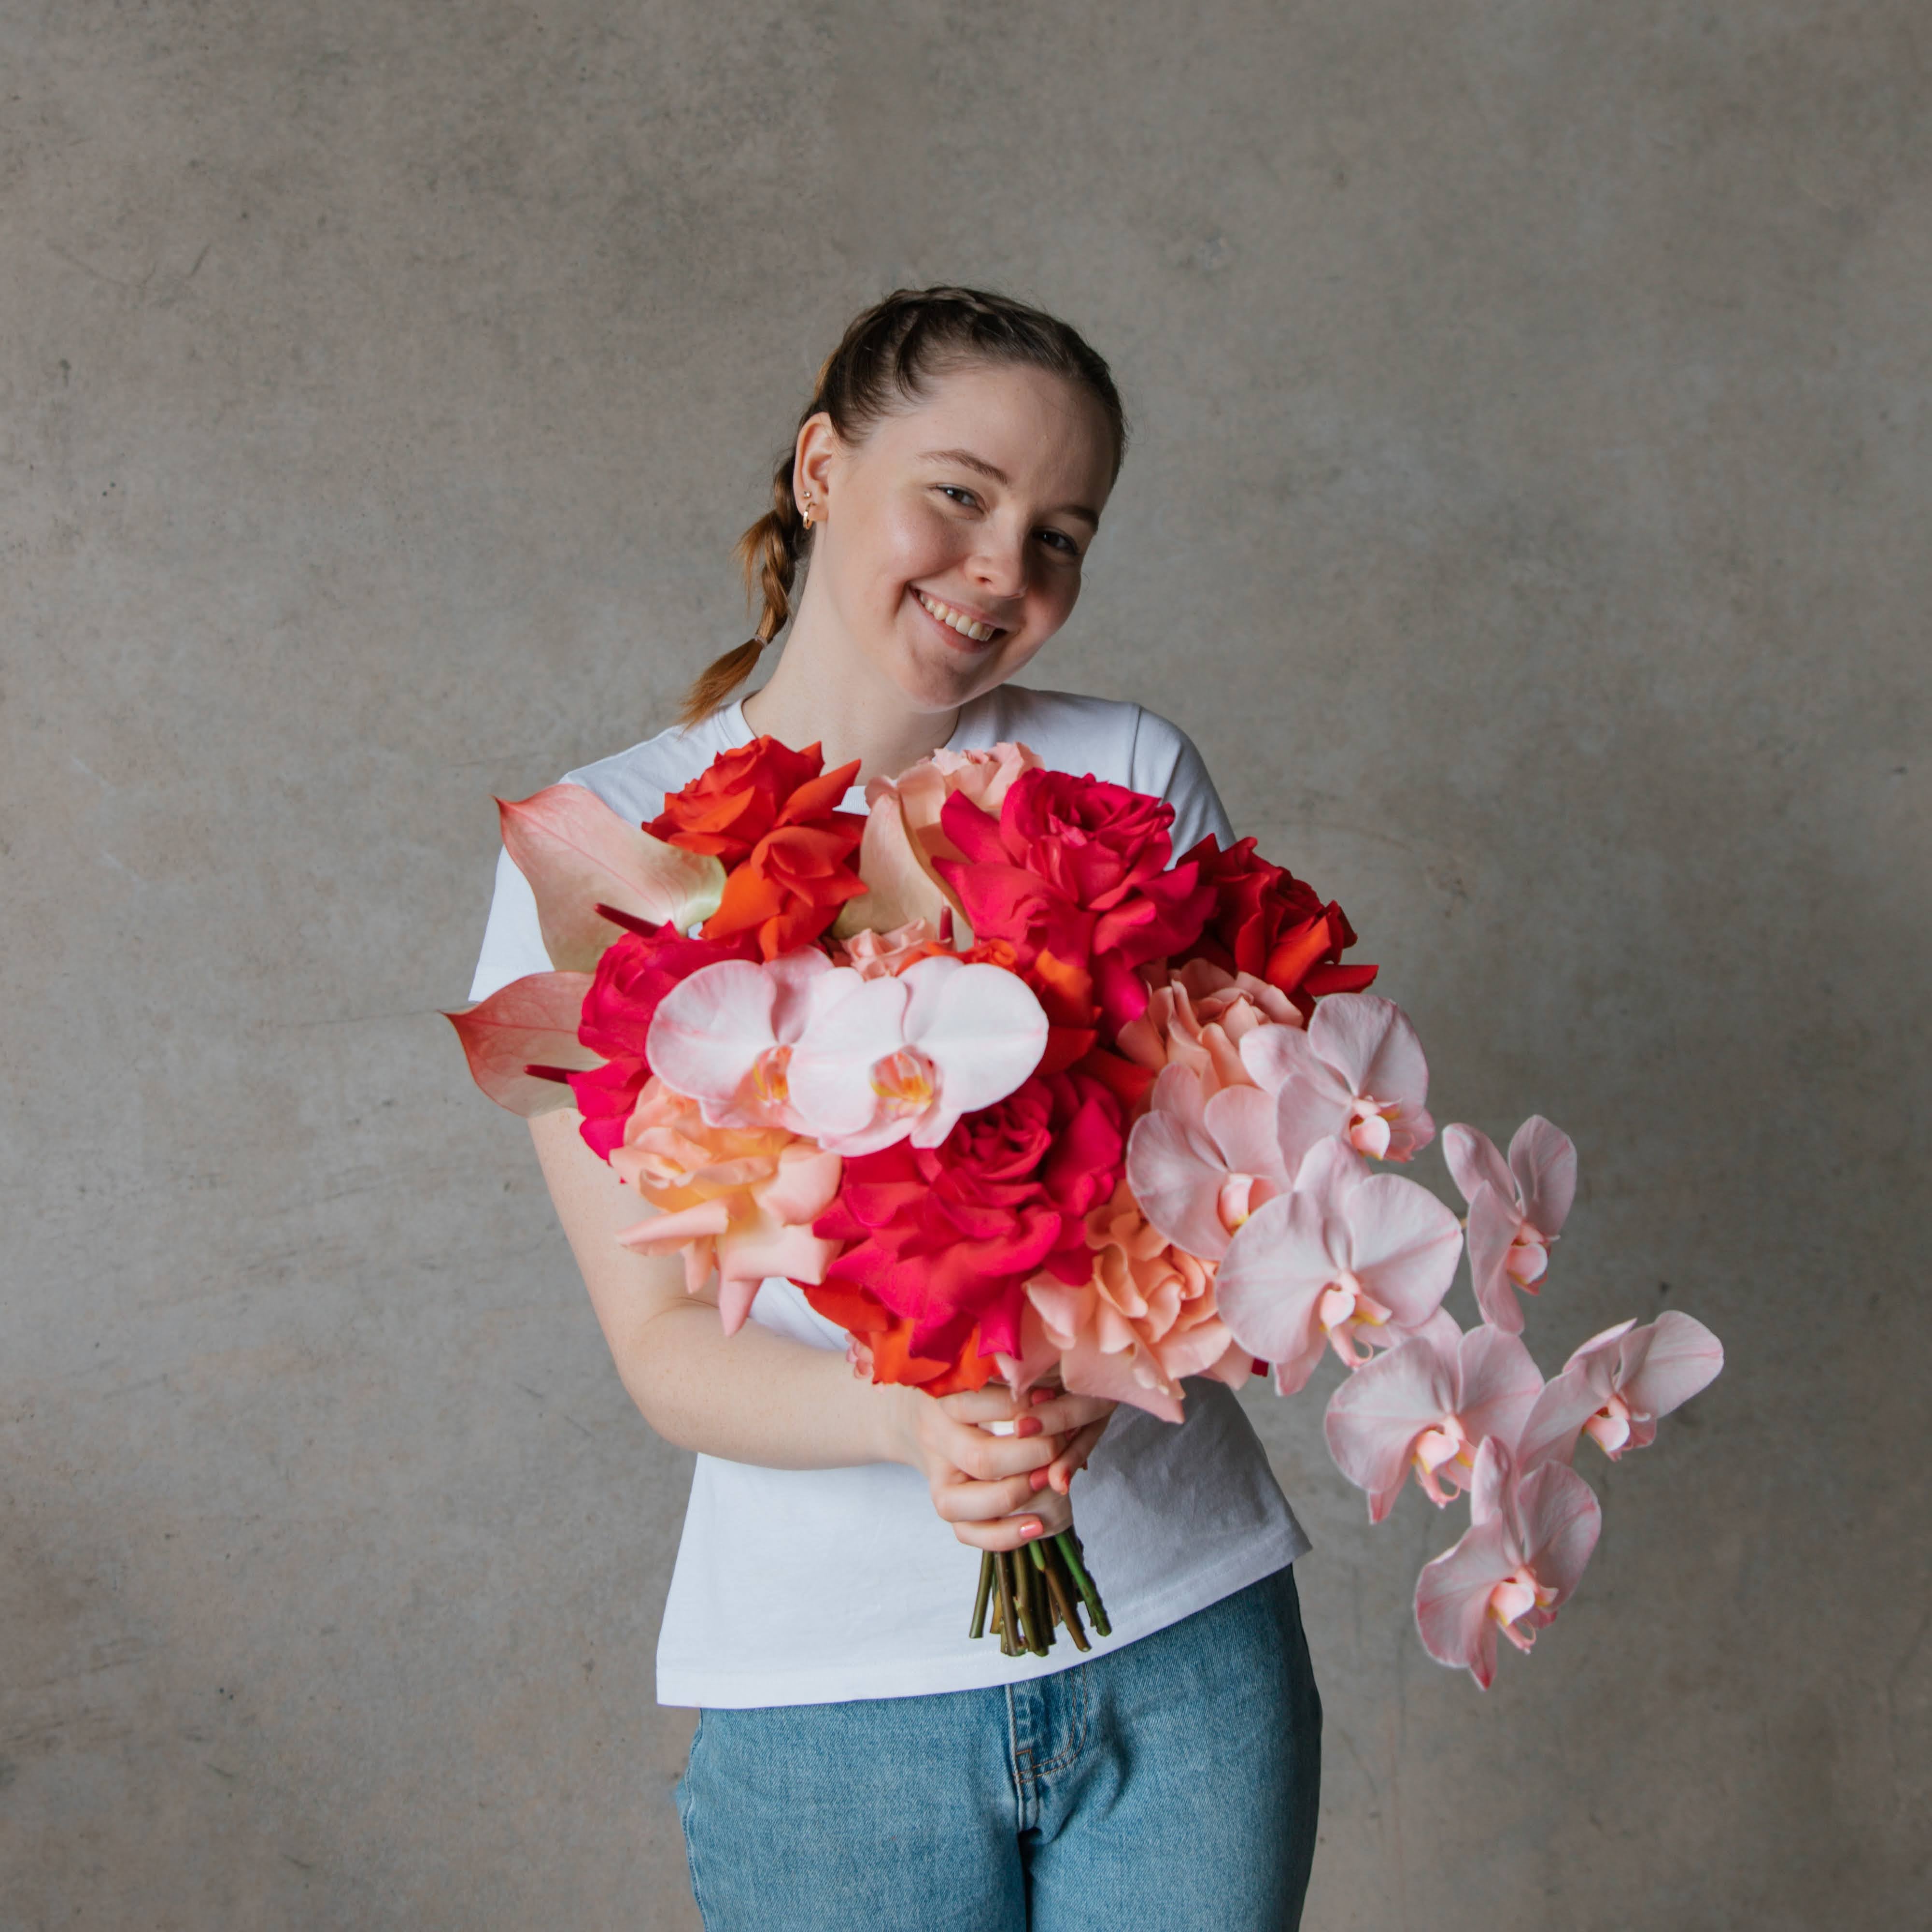 Mary Fryar Beija Flor Florist with her Floral Arrangement